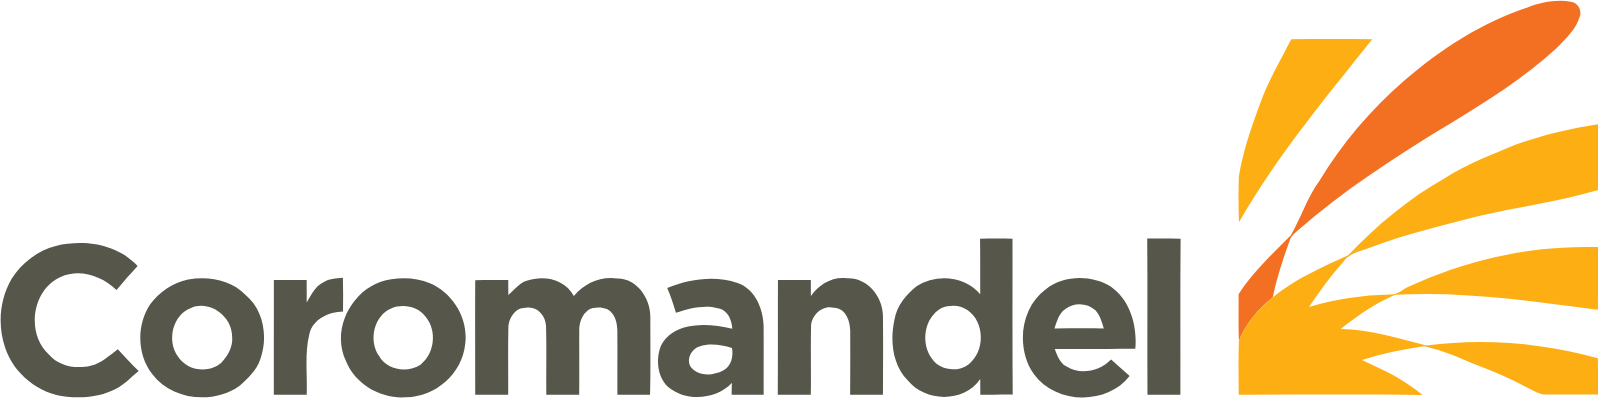 Coromandel logo large (transparent PNG)